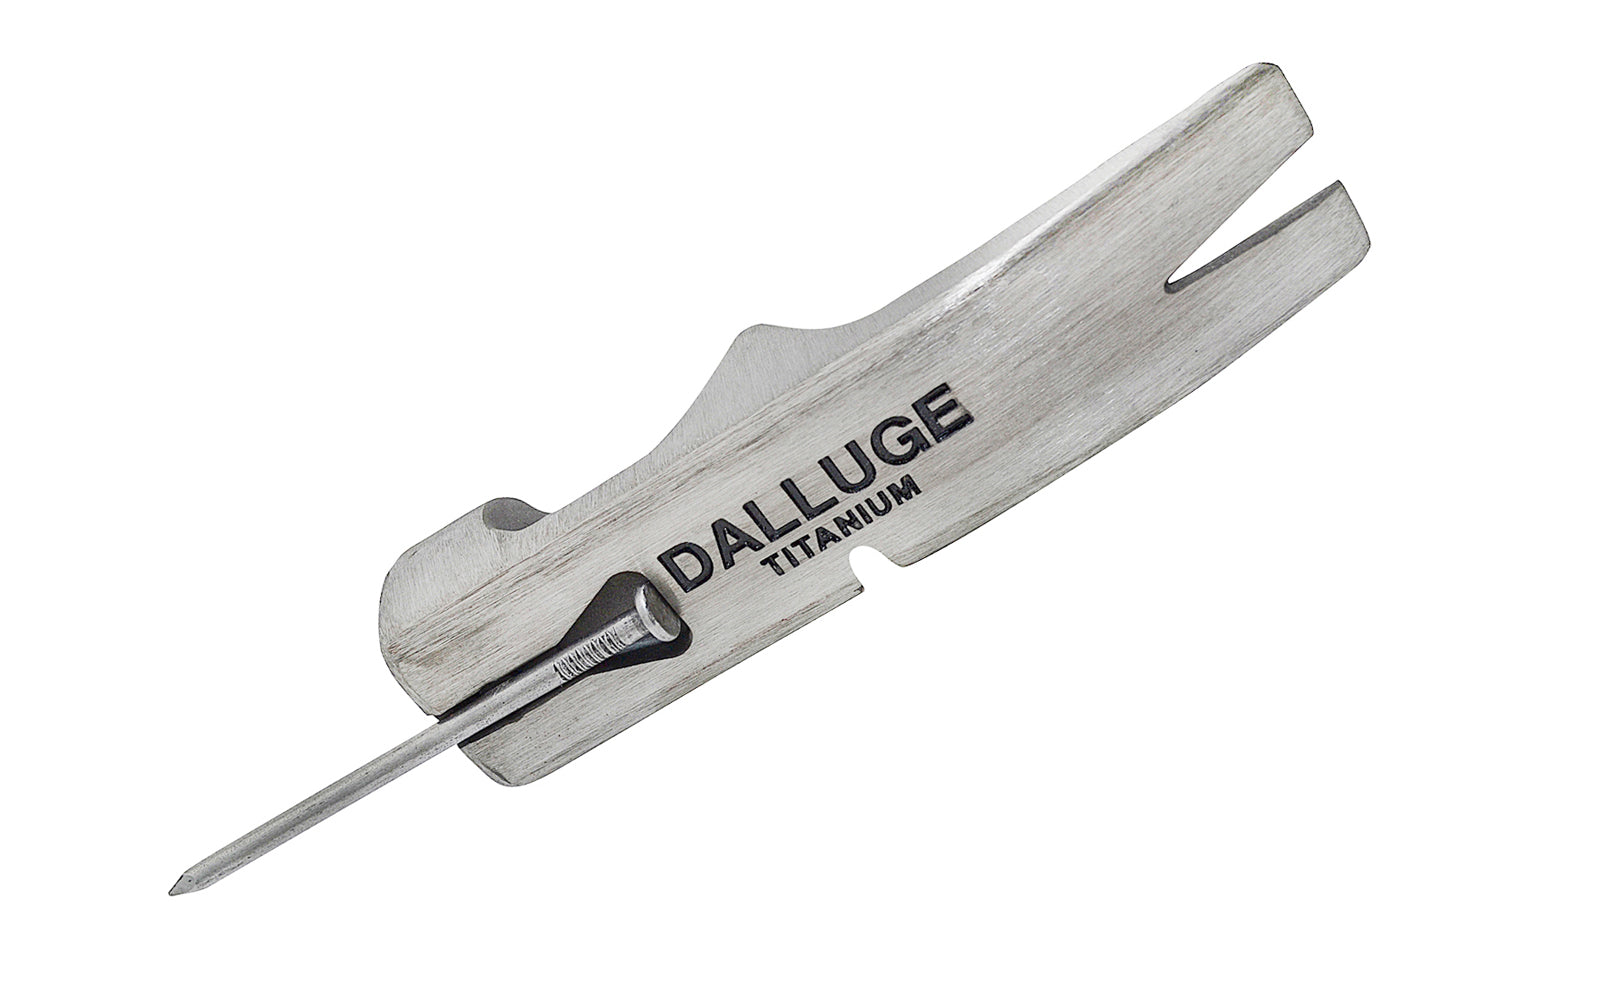 This 16 oz Dalluge Titanium hammer has a patented deep 